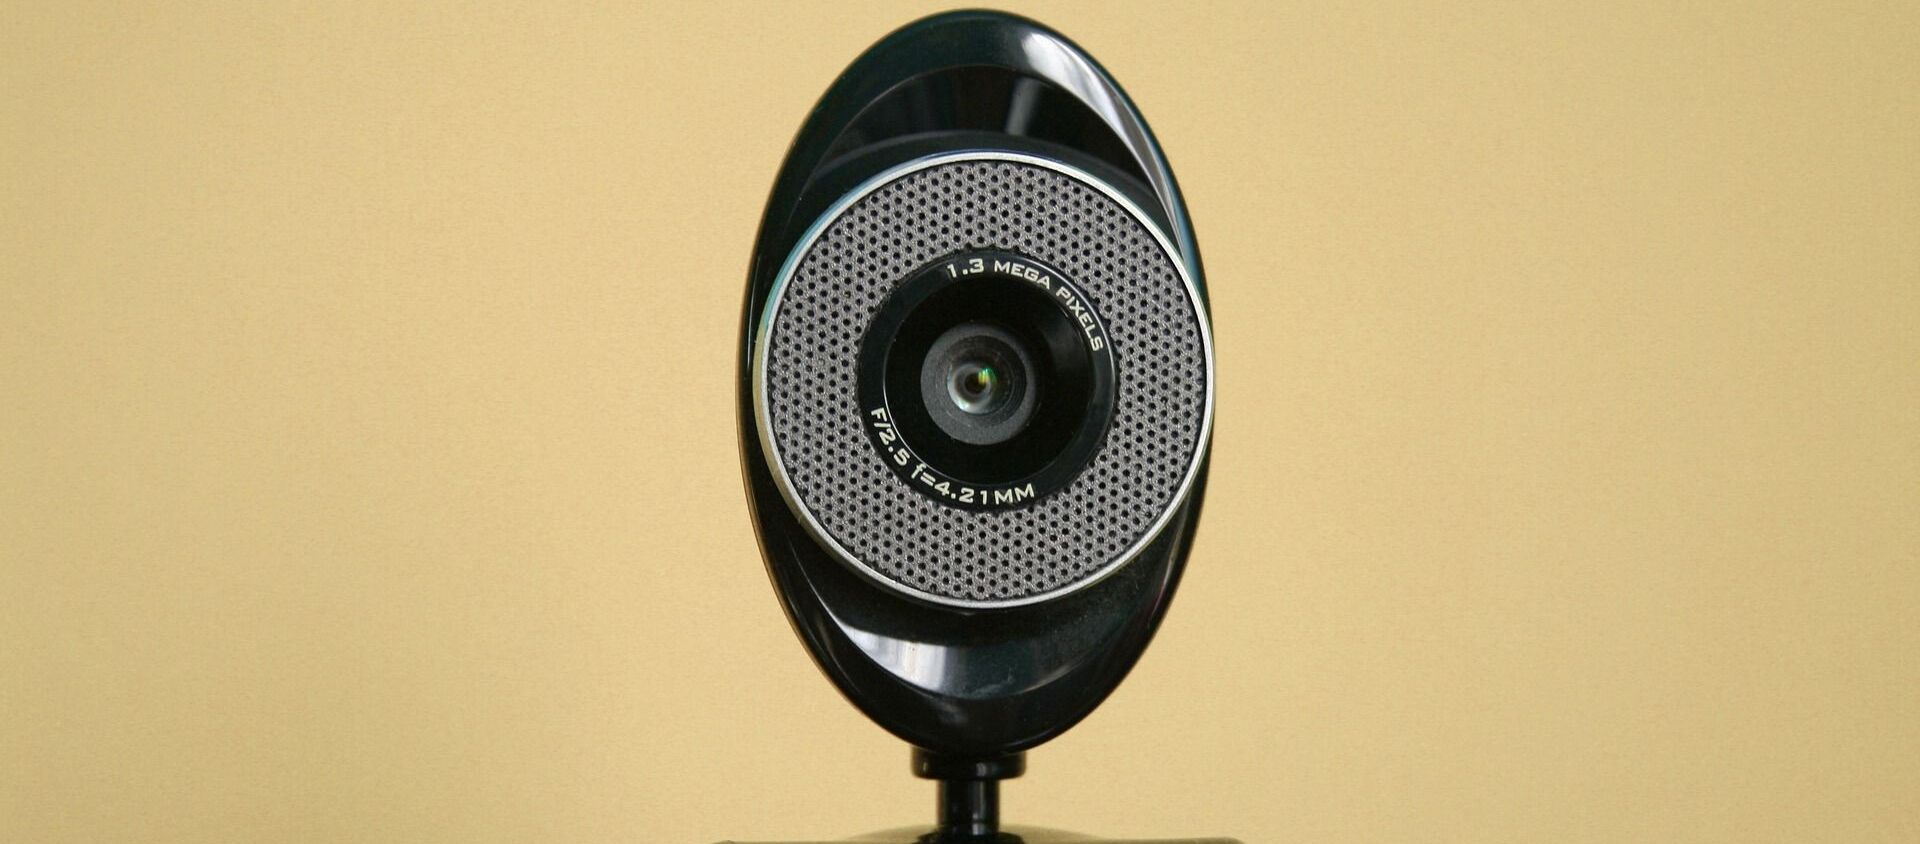 Una cámara web - Sputnik Mundo, 1920, 16.09.2020